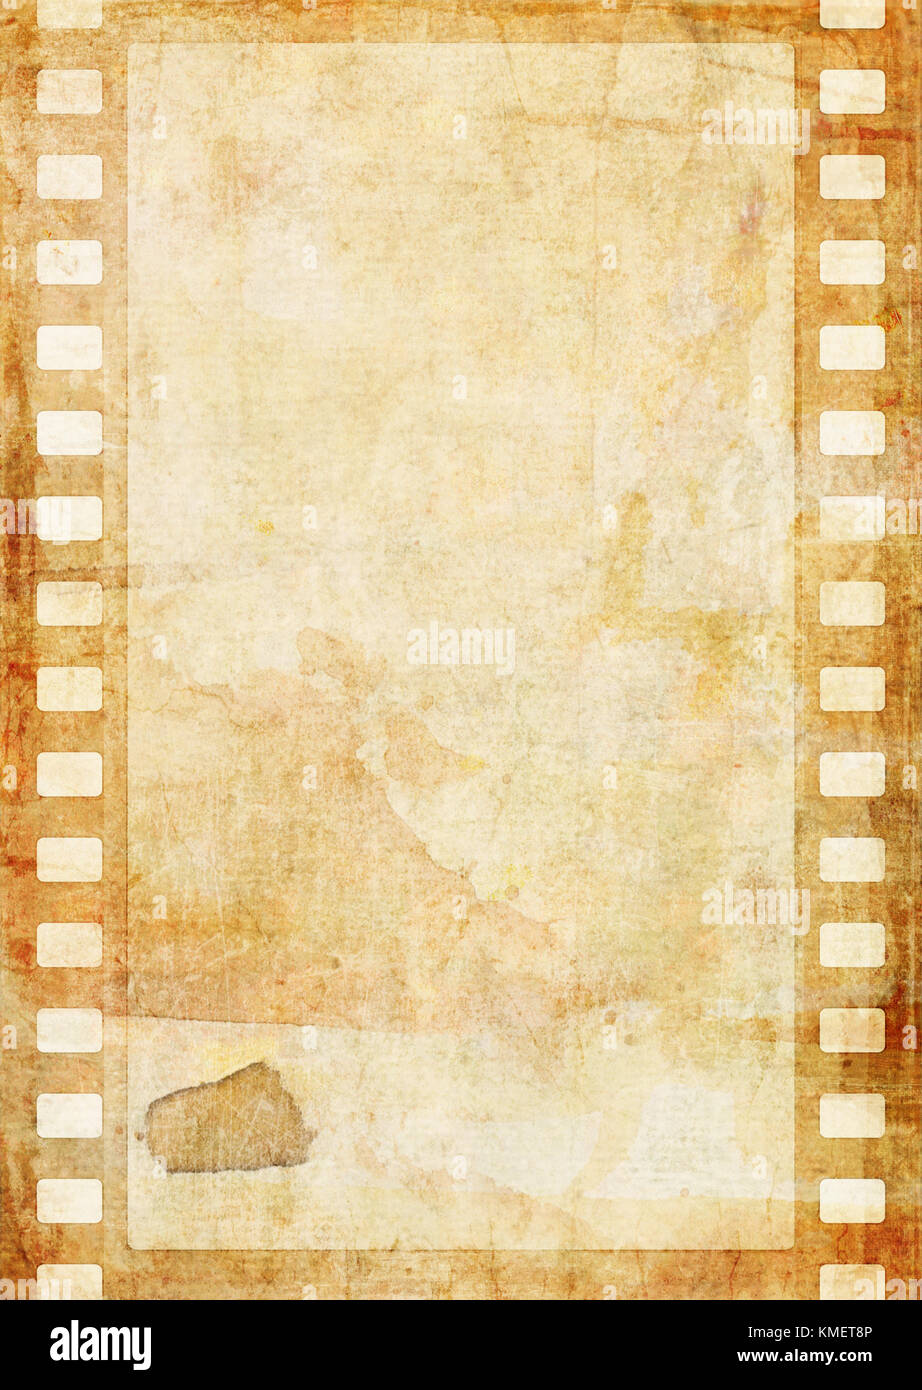 https://c8.alamy.com/comp/KMET8P/grunge-paper-background-with-film-strip-border-KMET8P.jpg